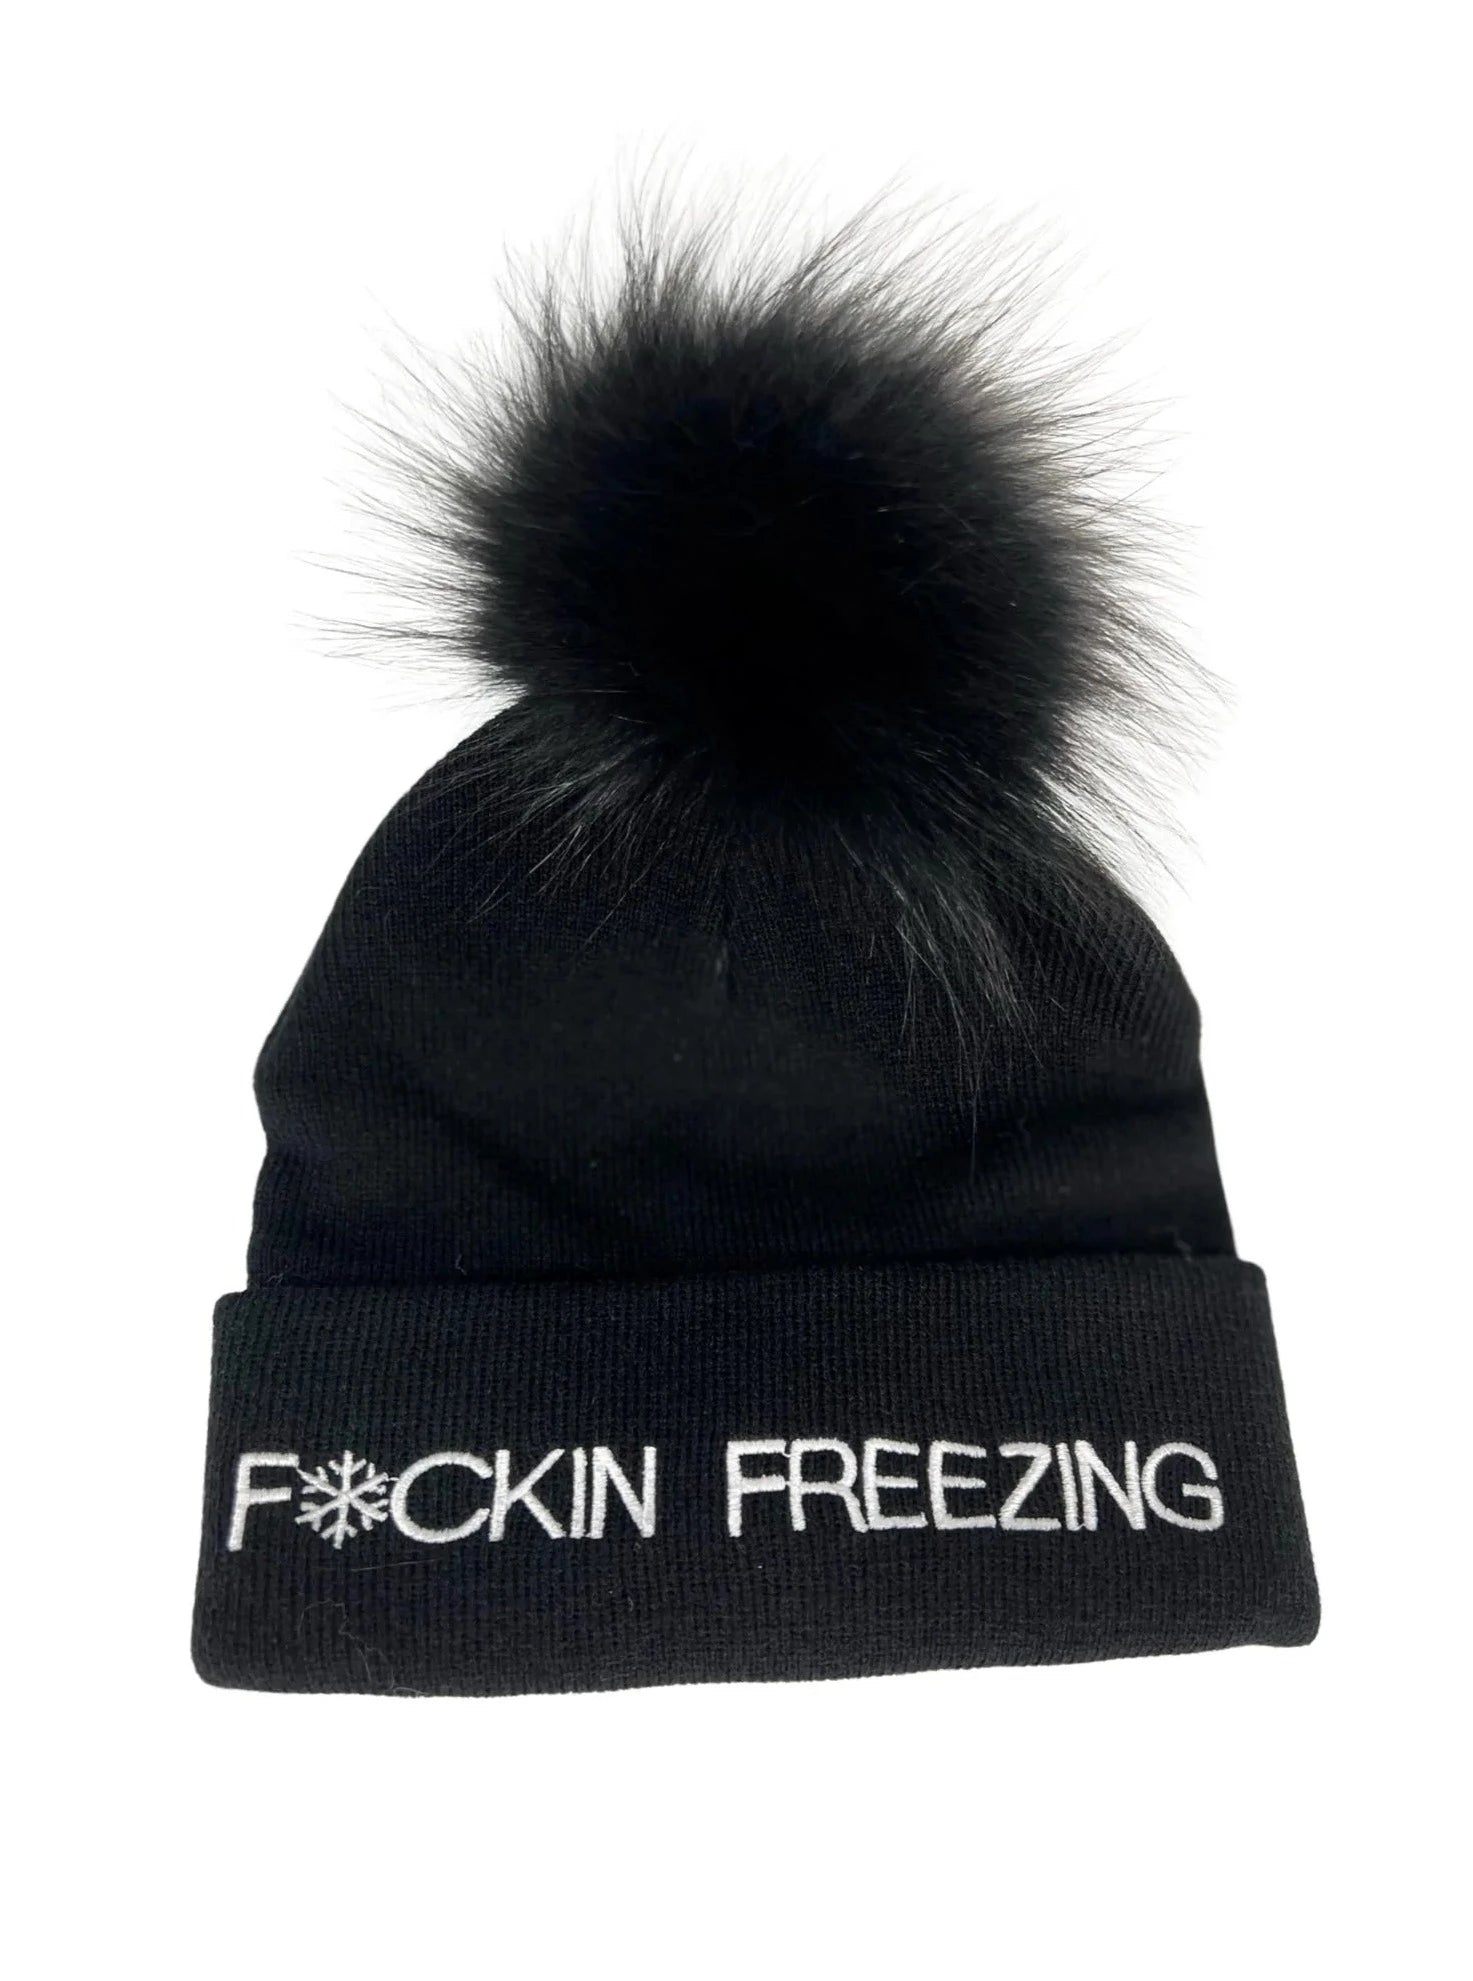 Boutique Pom La Fox Ooh Knitted – Pom F*cking La Black Hat Freezing with [Black-HTRA01]